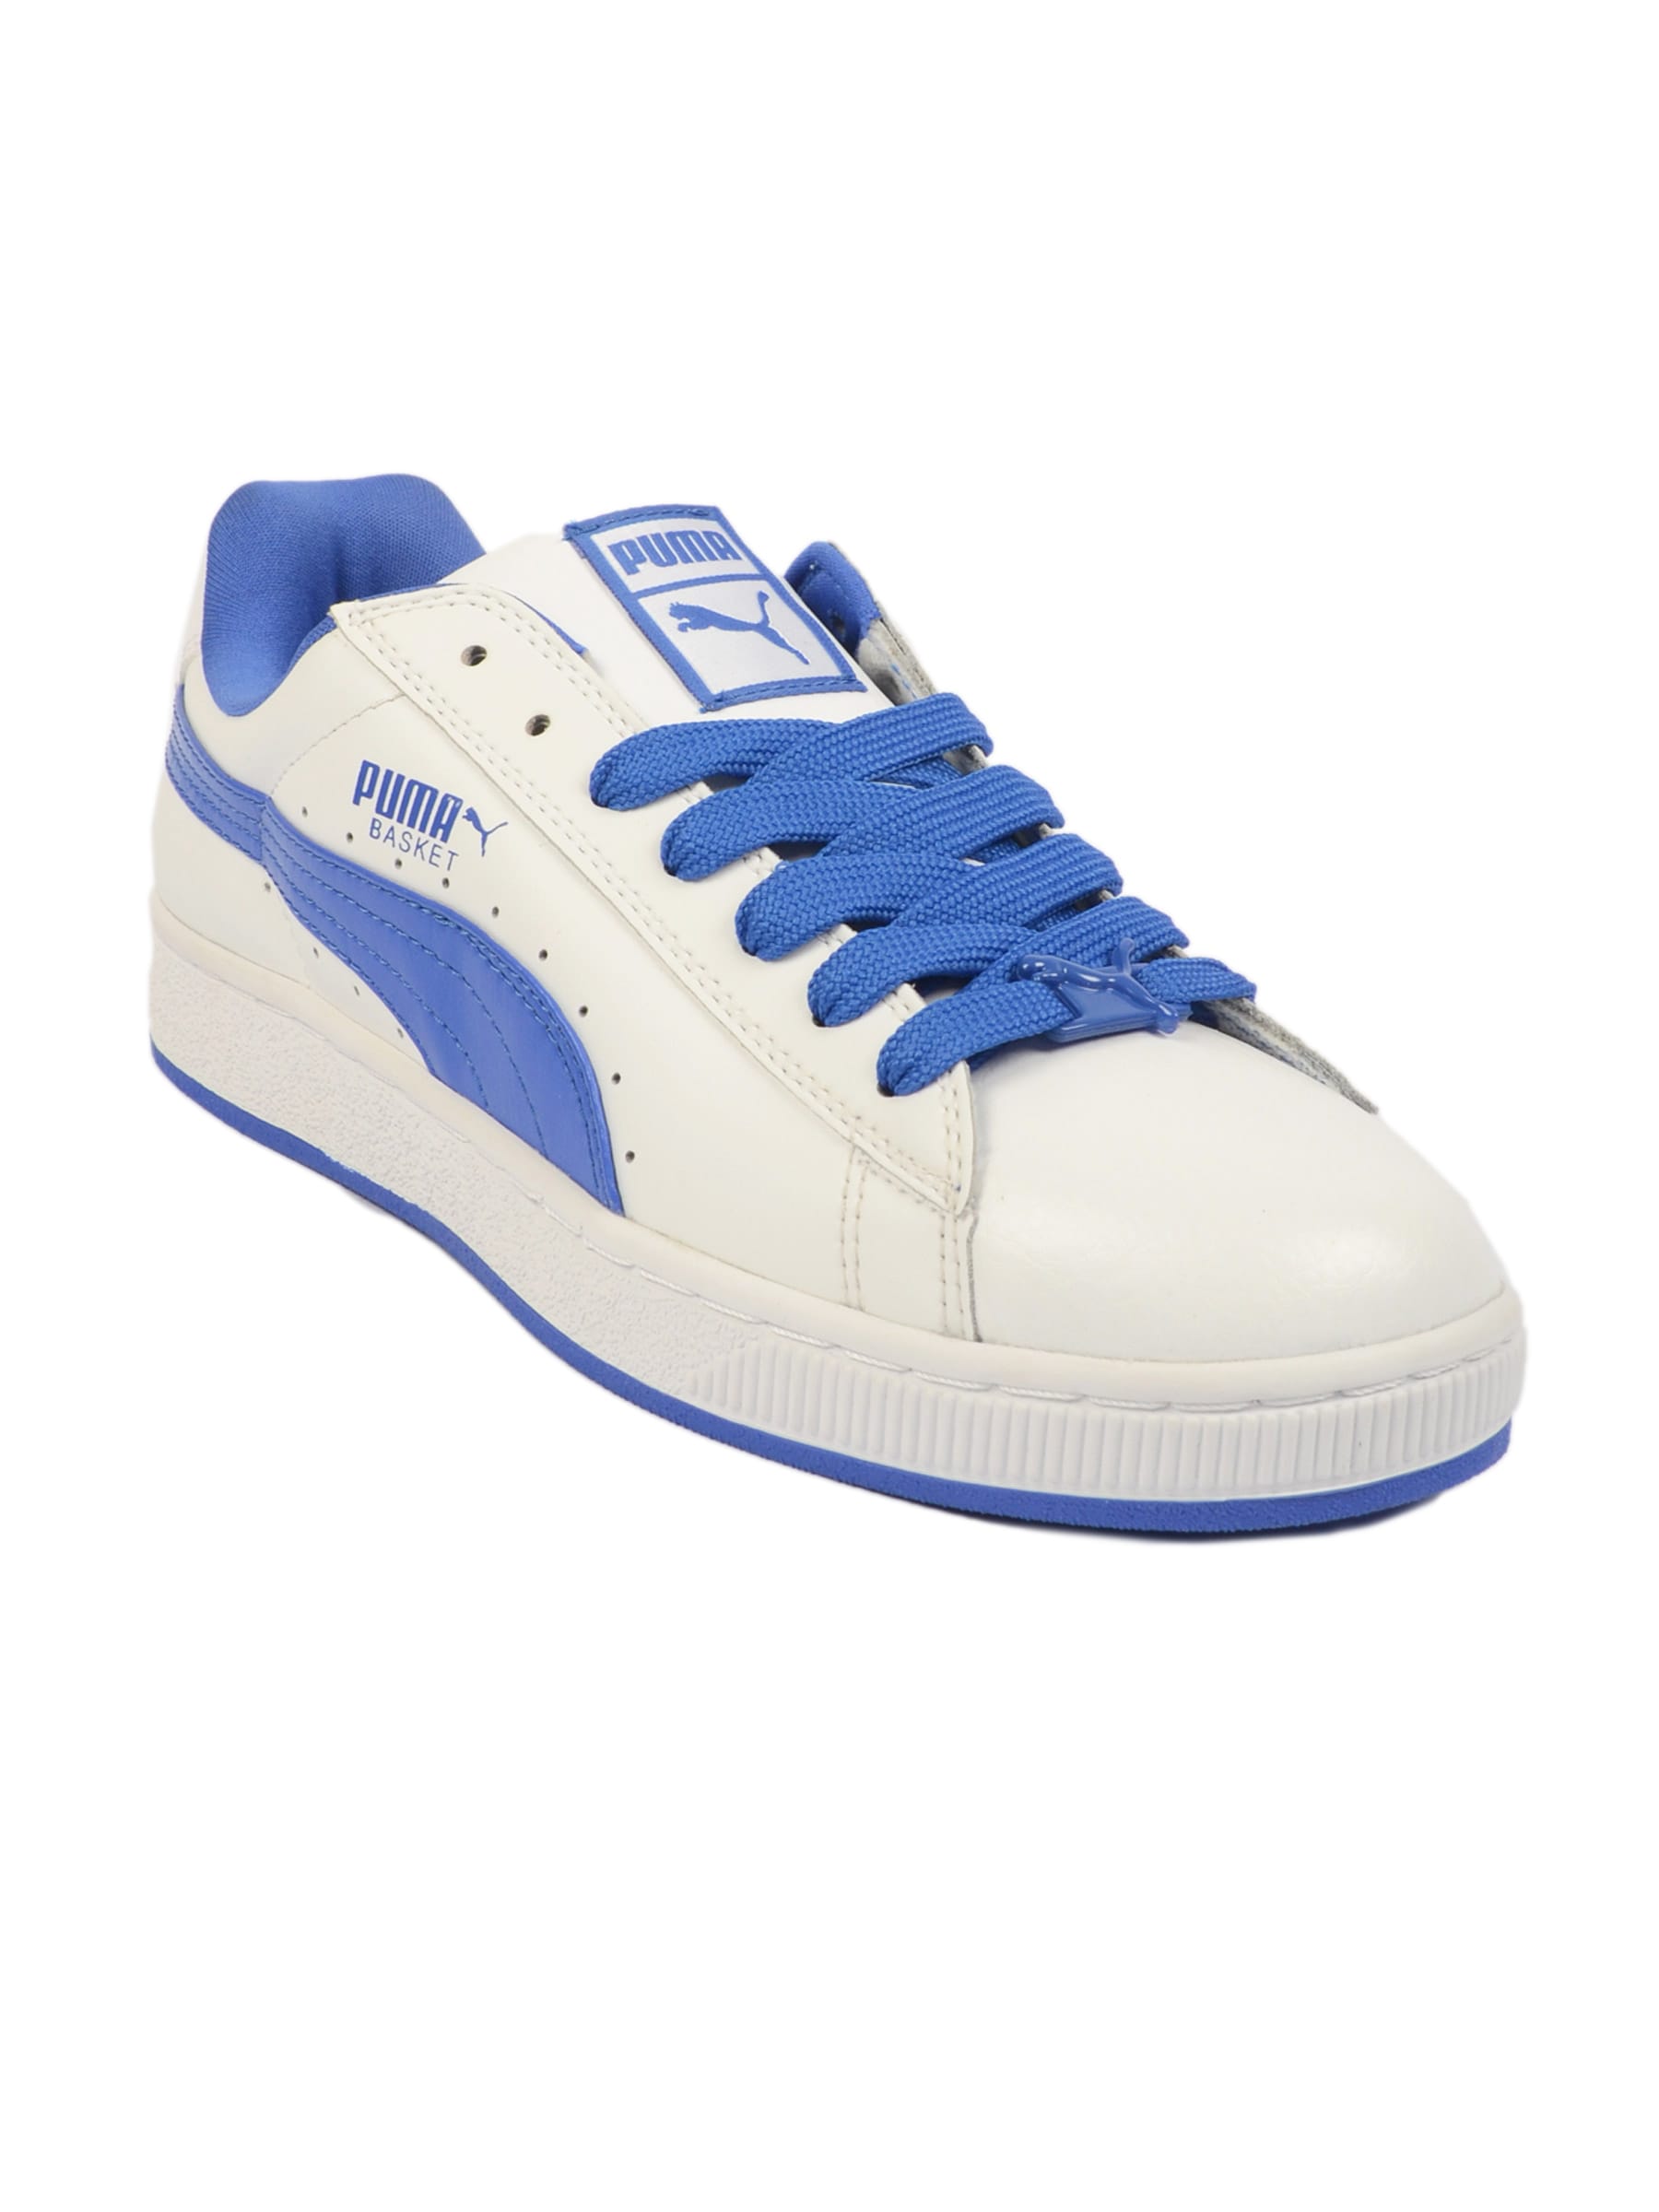 Puma Men's Basket Biz White & Blue Shoe